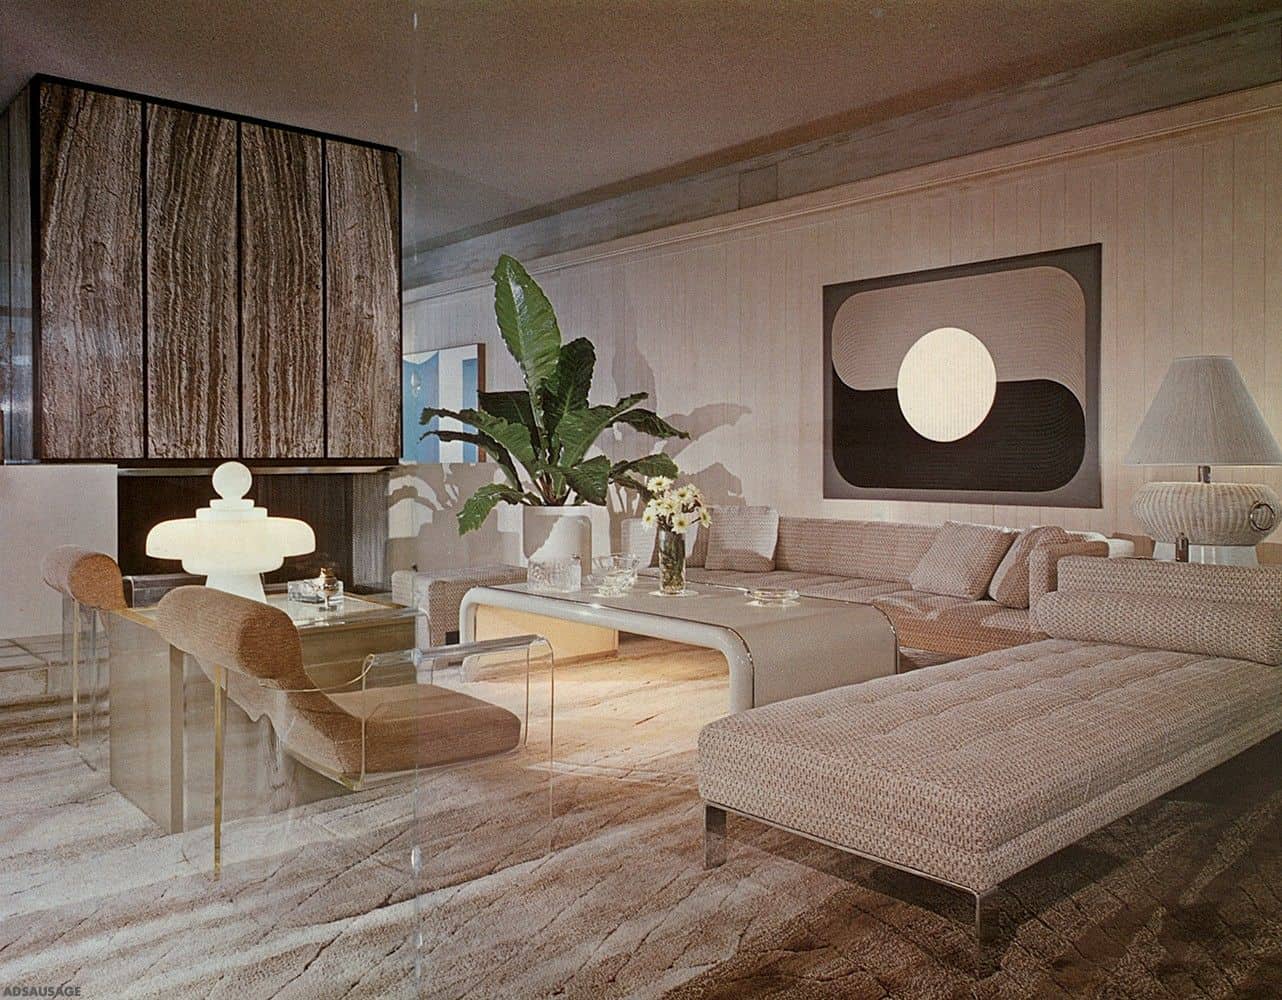 1970 Vintage style decor